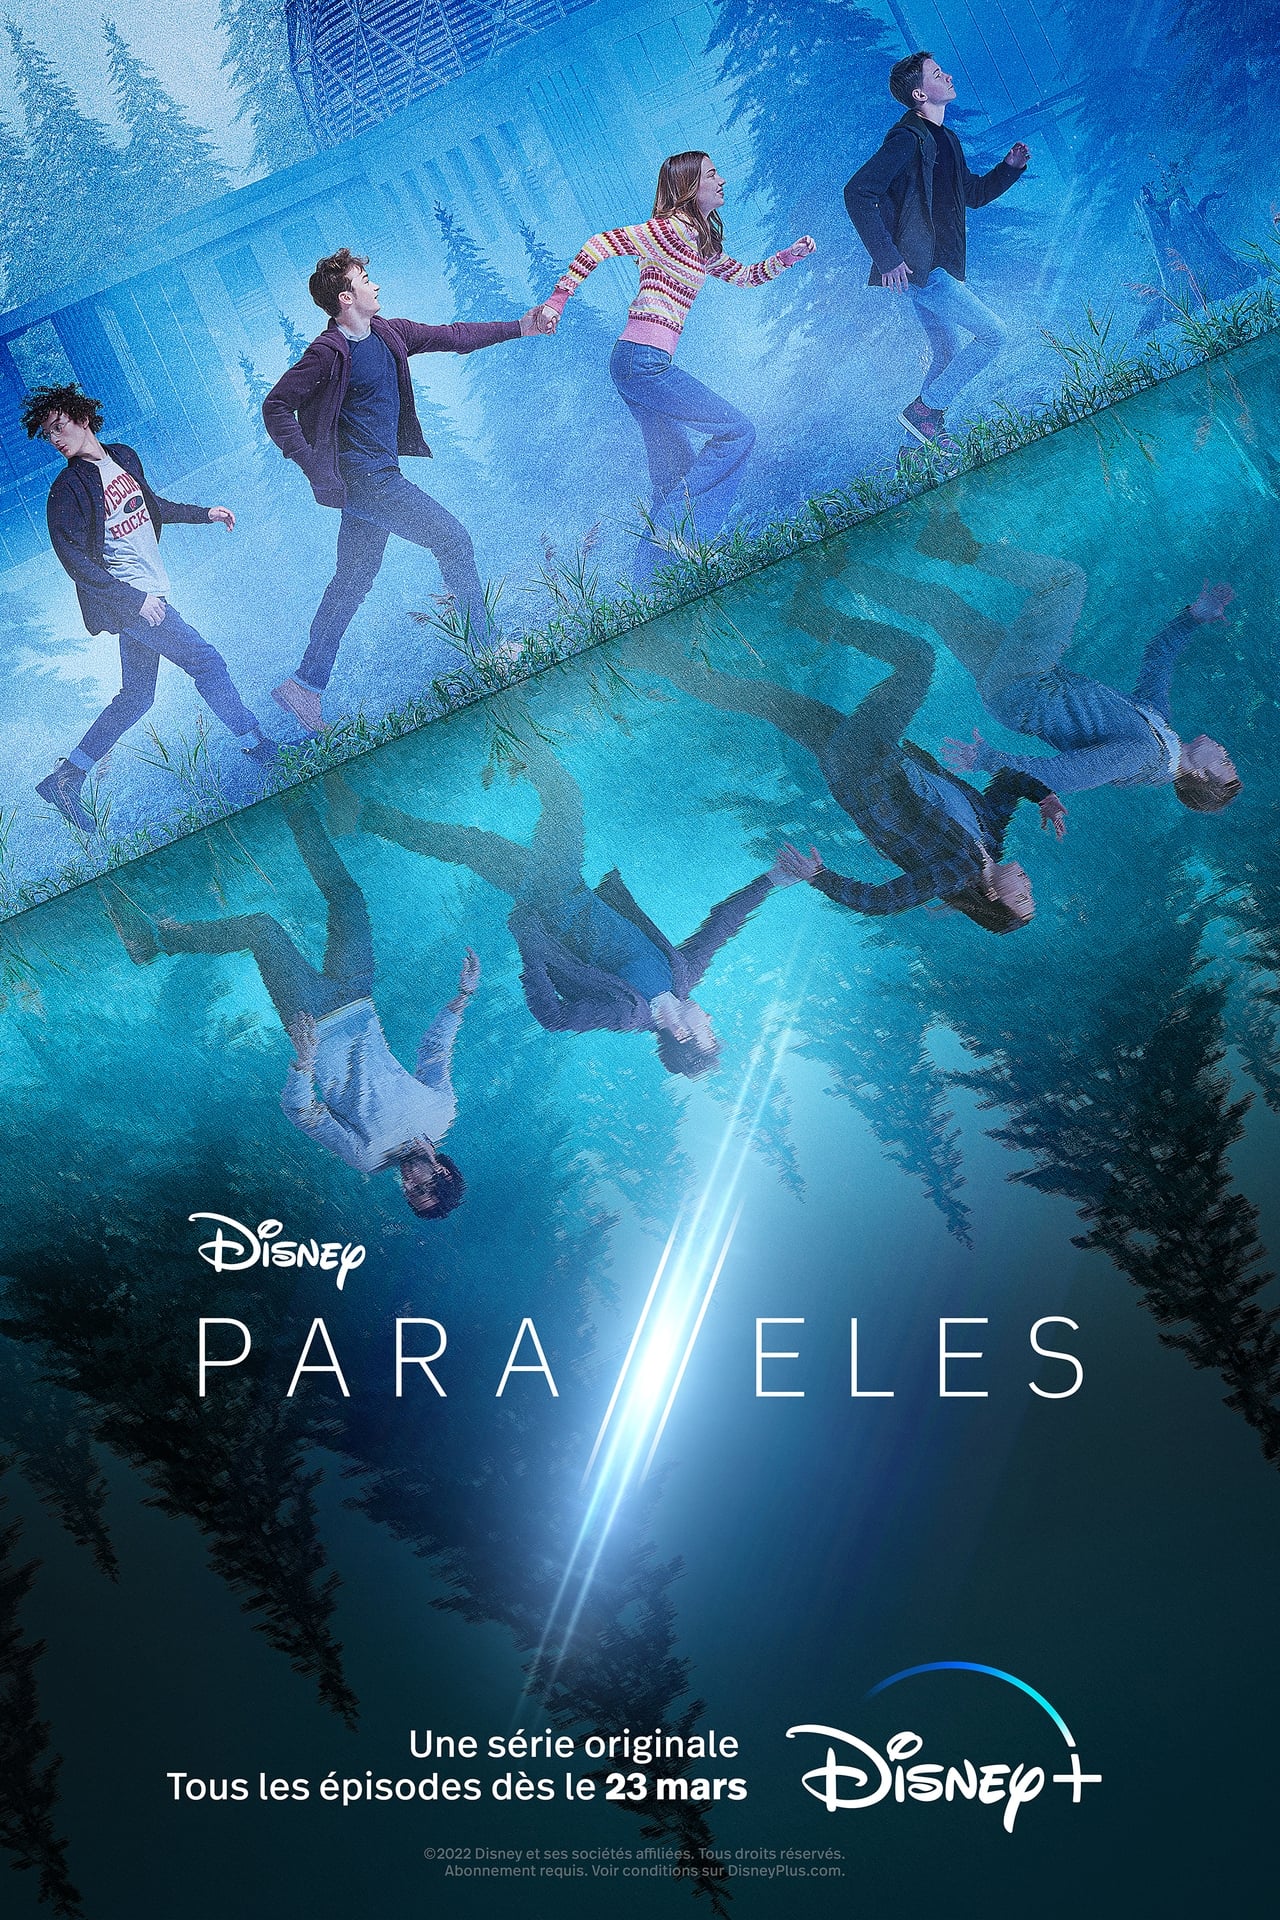 Parallels (season 1)